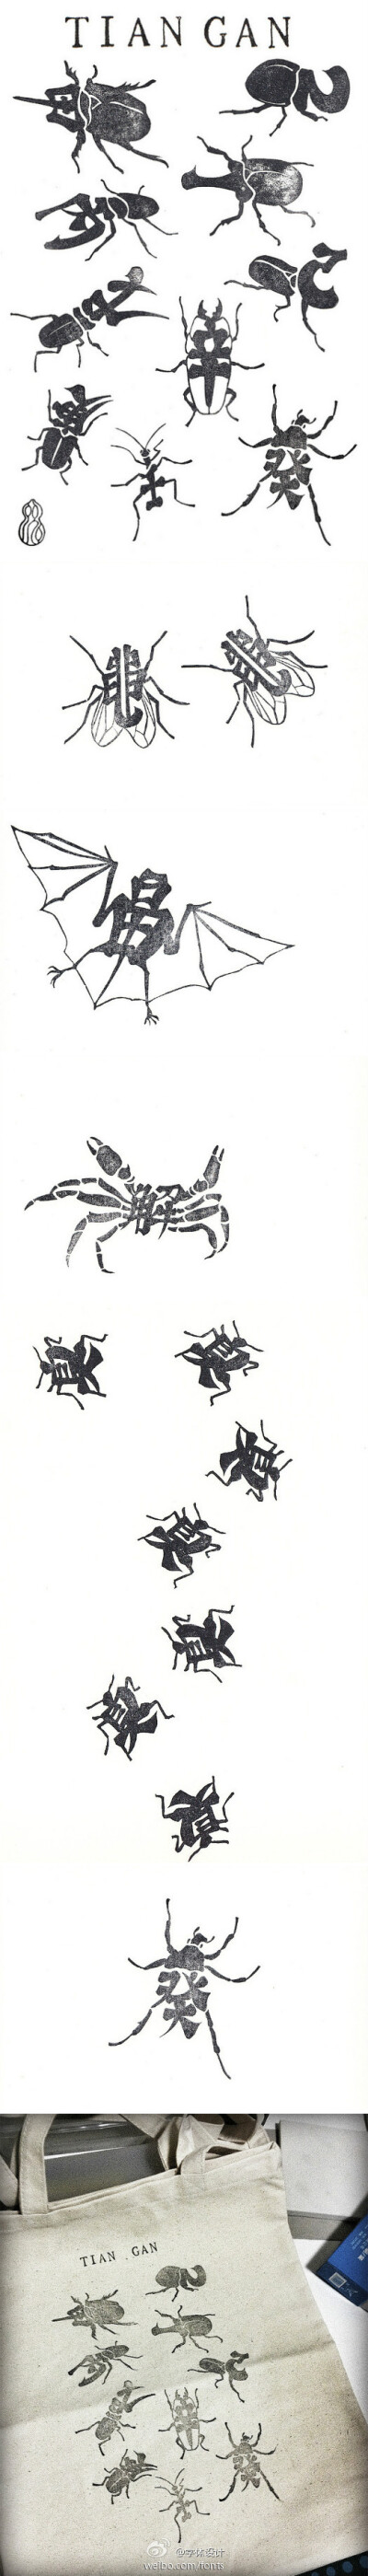 PRO HUANG 昆虫字体设计作品欣赏。iFont>>http://t.cn/zRaJh4Z